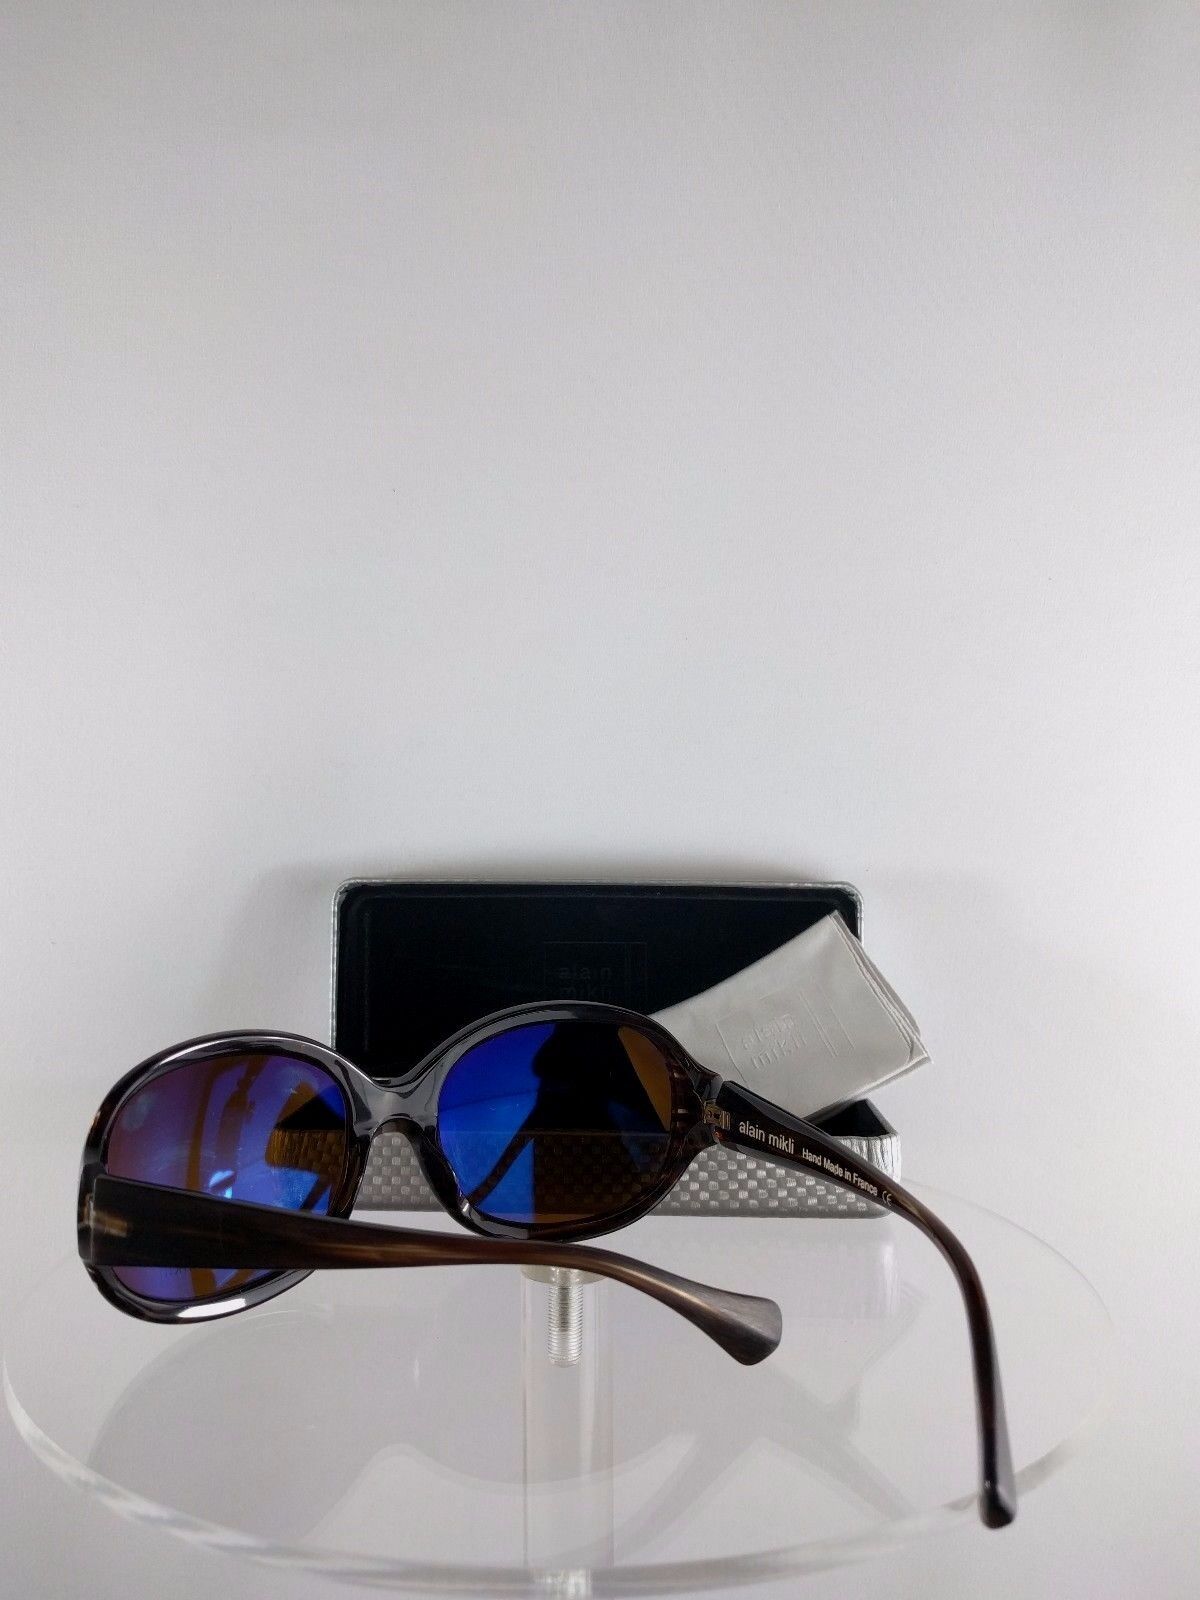 Brand New Authentic Alain Mikli Sunglasses AL 1166 2904 Red Transparent Frame